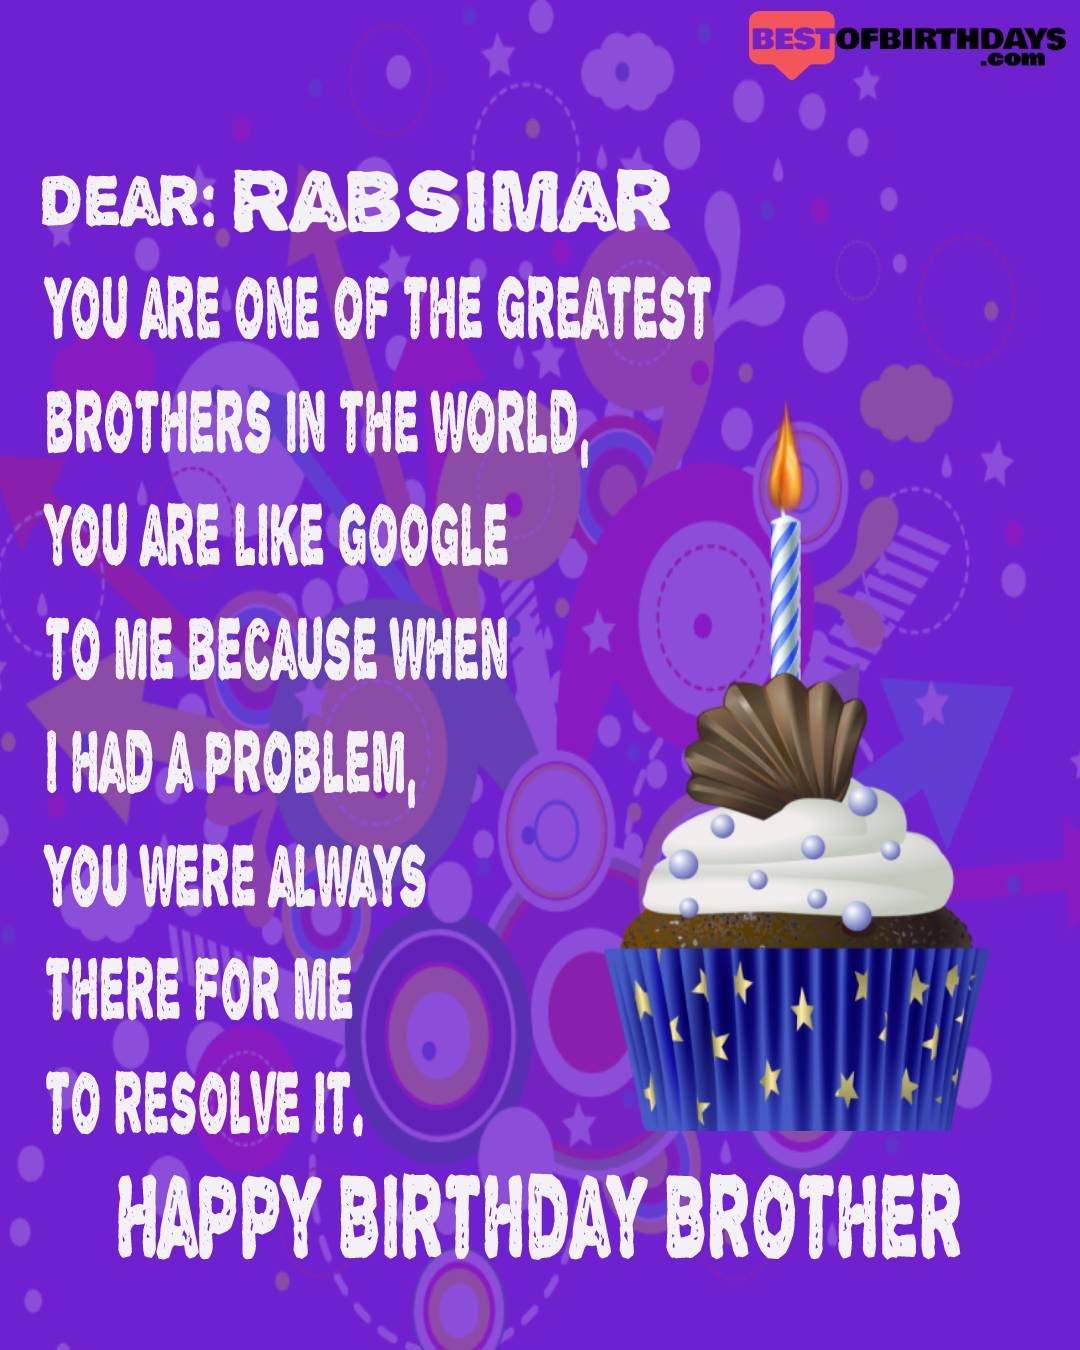 Happy birthday rabsimar bhai brother bro